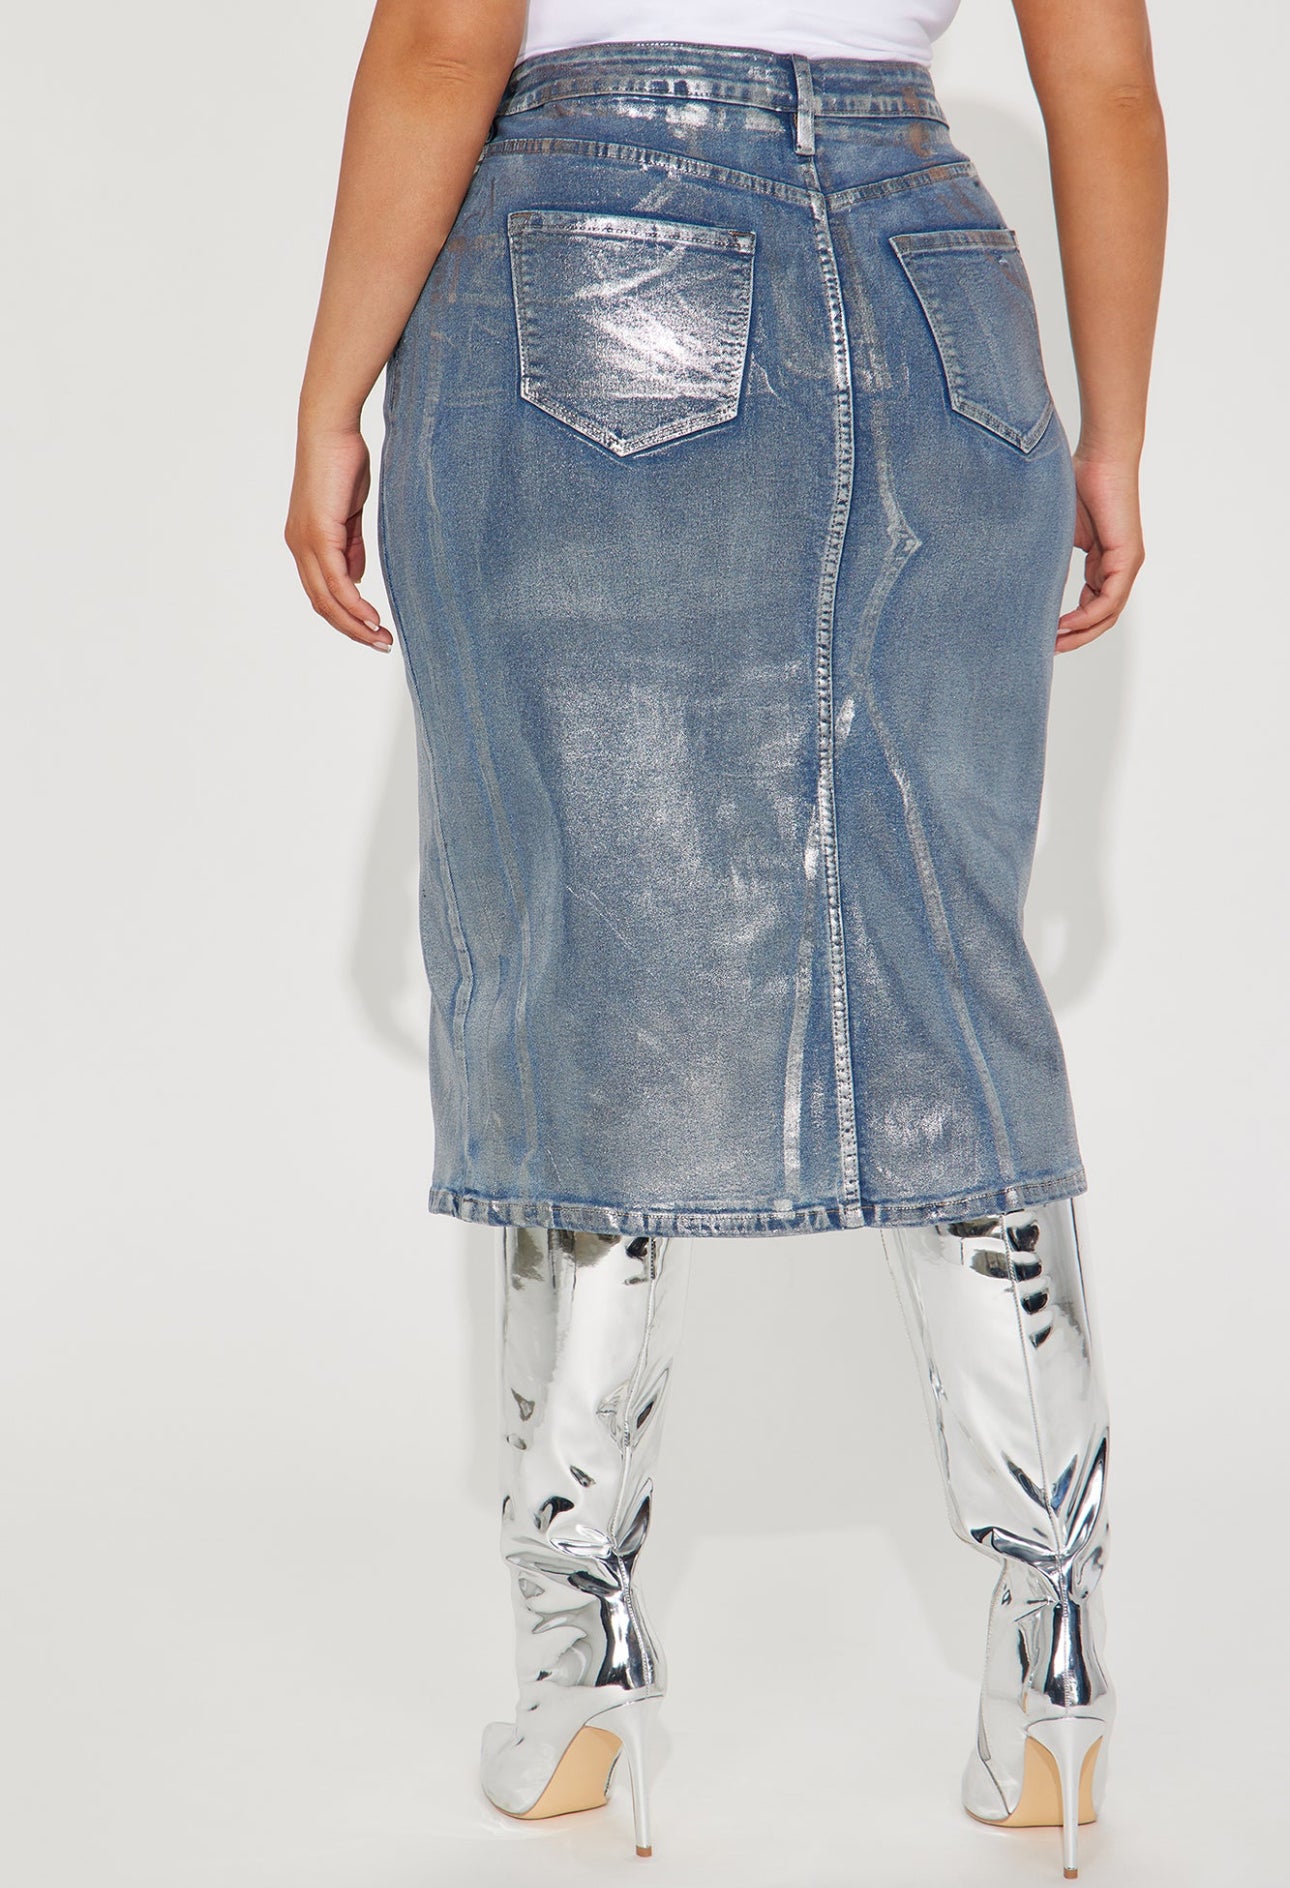 Metallic Fashion Denim Skirt